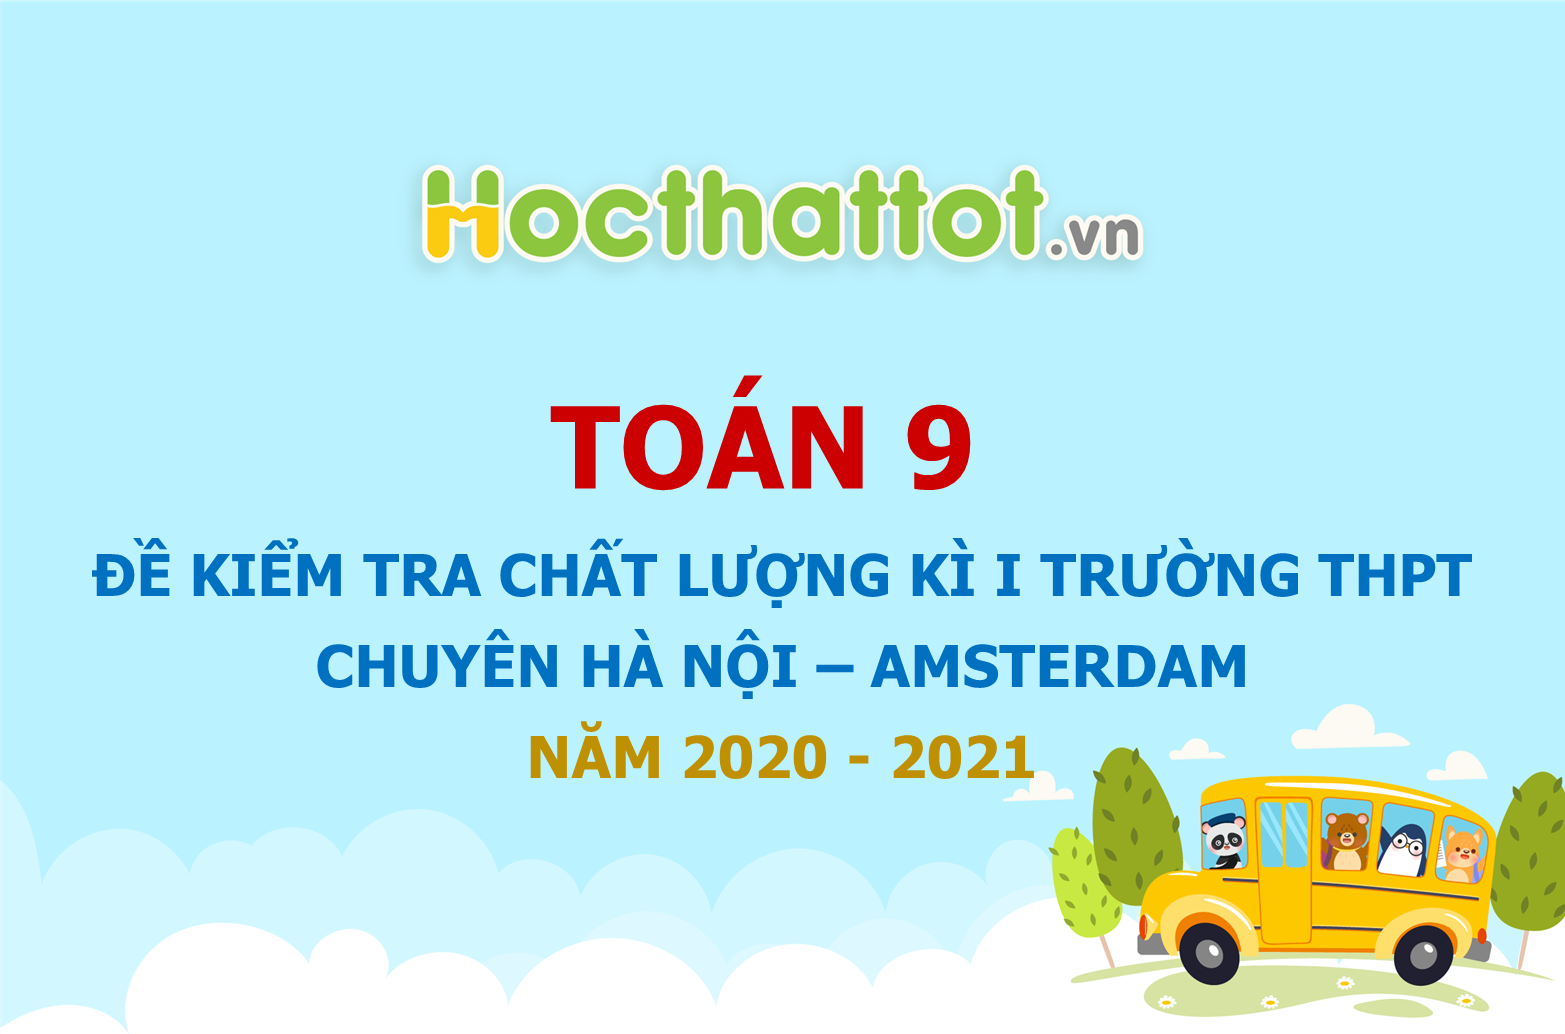 de-kiem-tra-chat-luong-ki-1-truong-THPT-chuyen-Ha-Noi-Amsterdam-nam-2020-2021.jpg